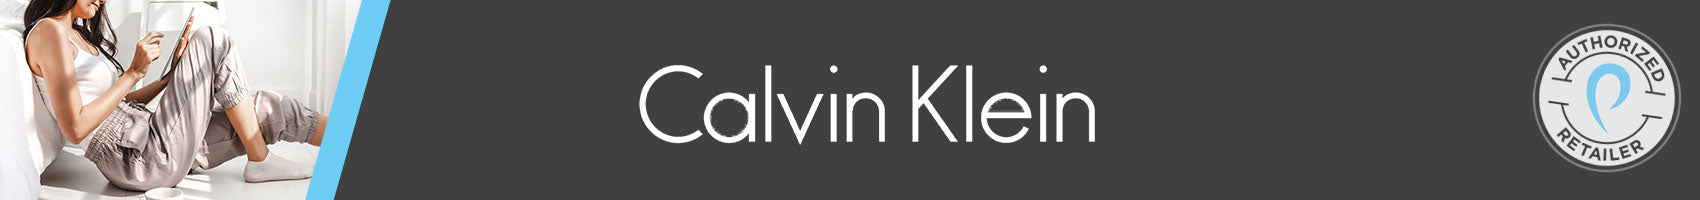 verlangen vertaling Verplicht Calvin Klein Outlet | CK Online Store | USA | CANADA | Proozy – Page 2 –  PROOZY